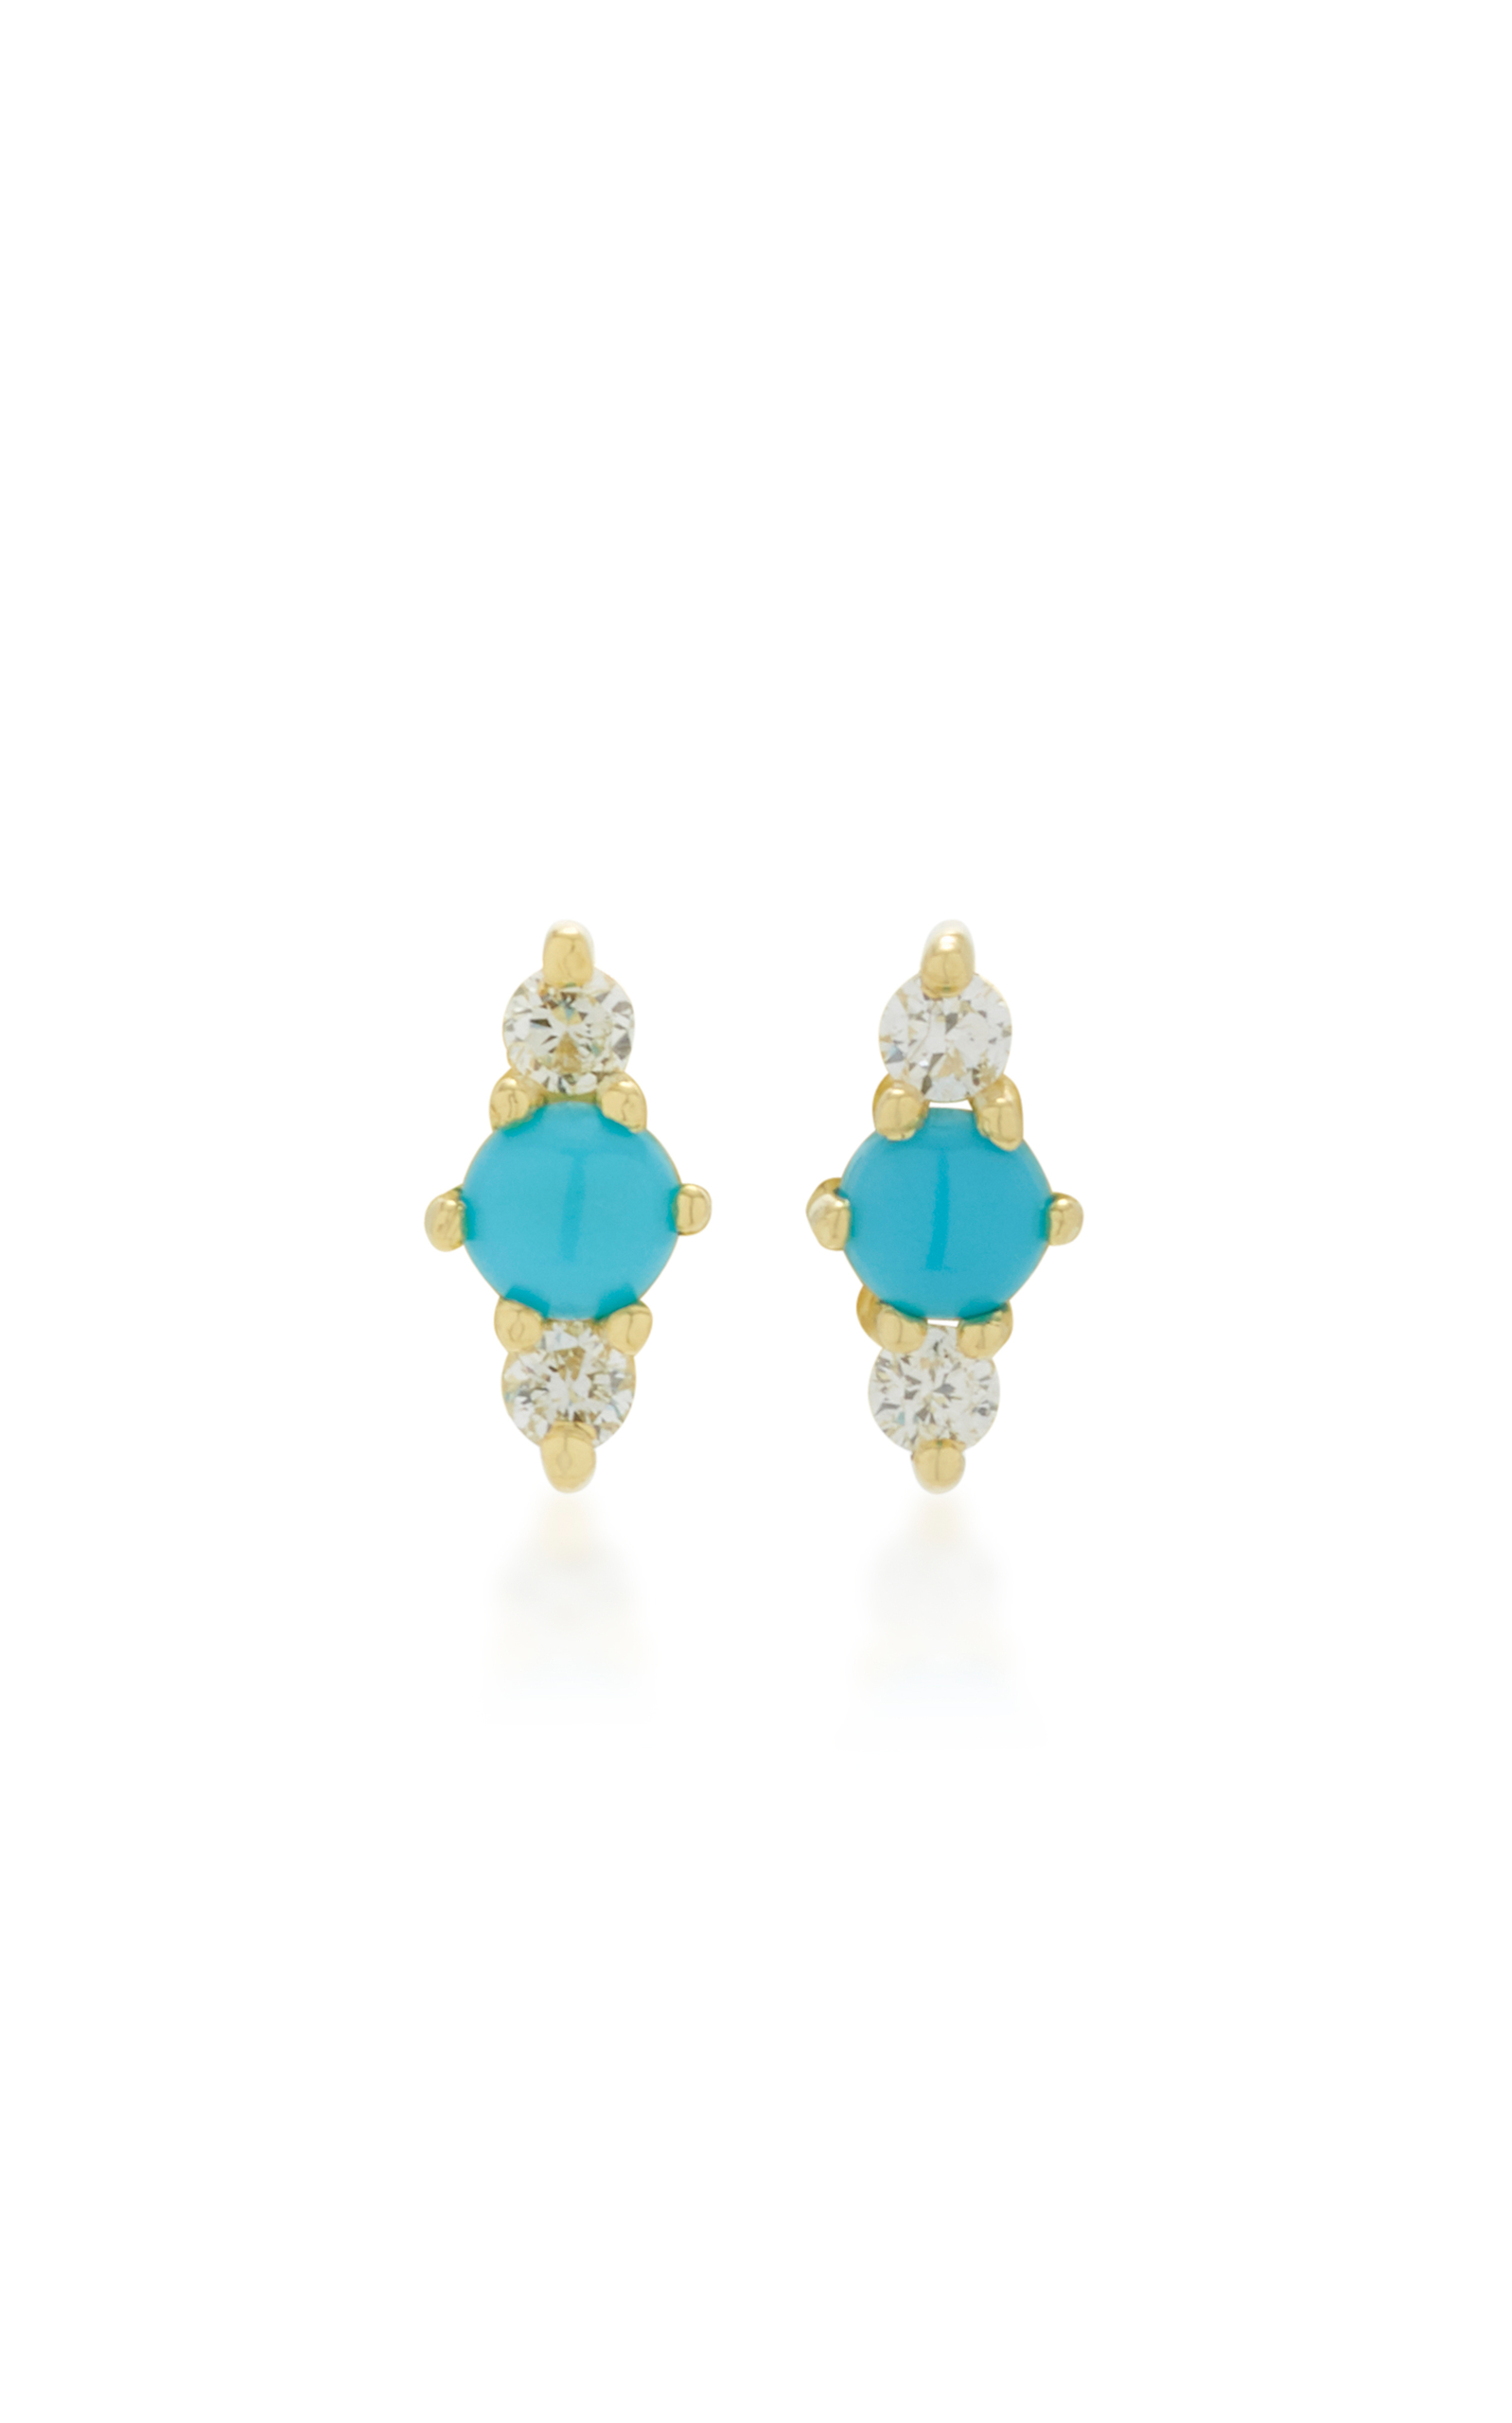 Hanley 14K Gold Turquoise and Diamond Earrings